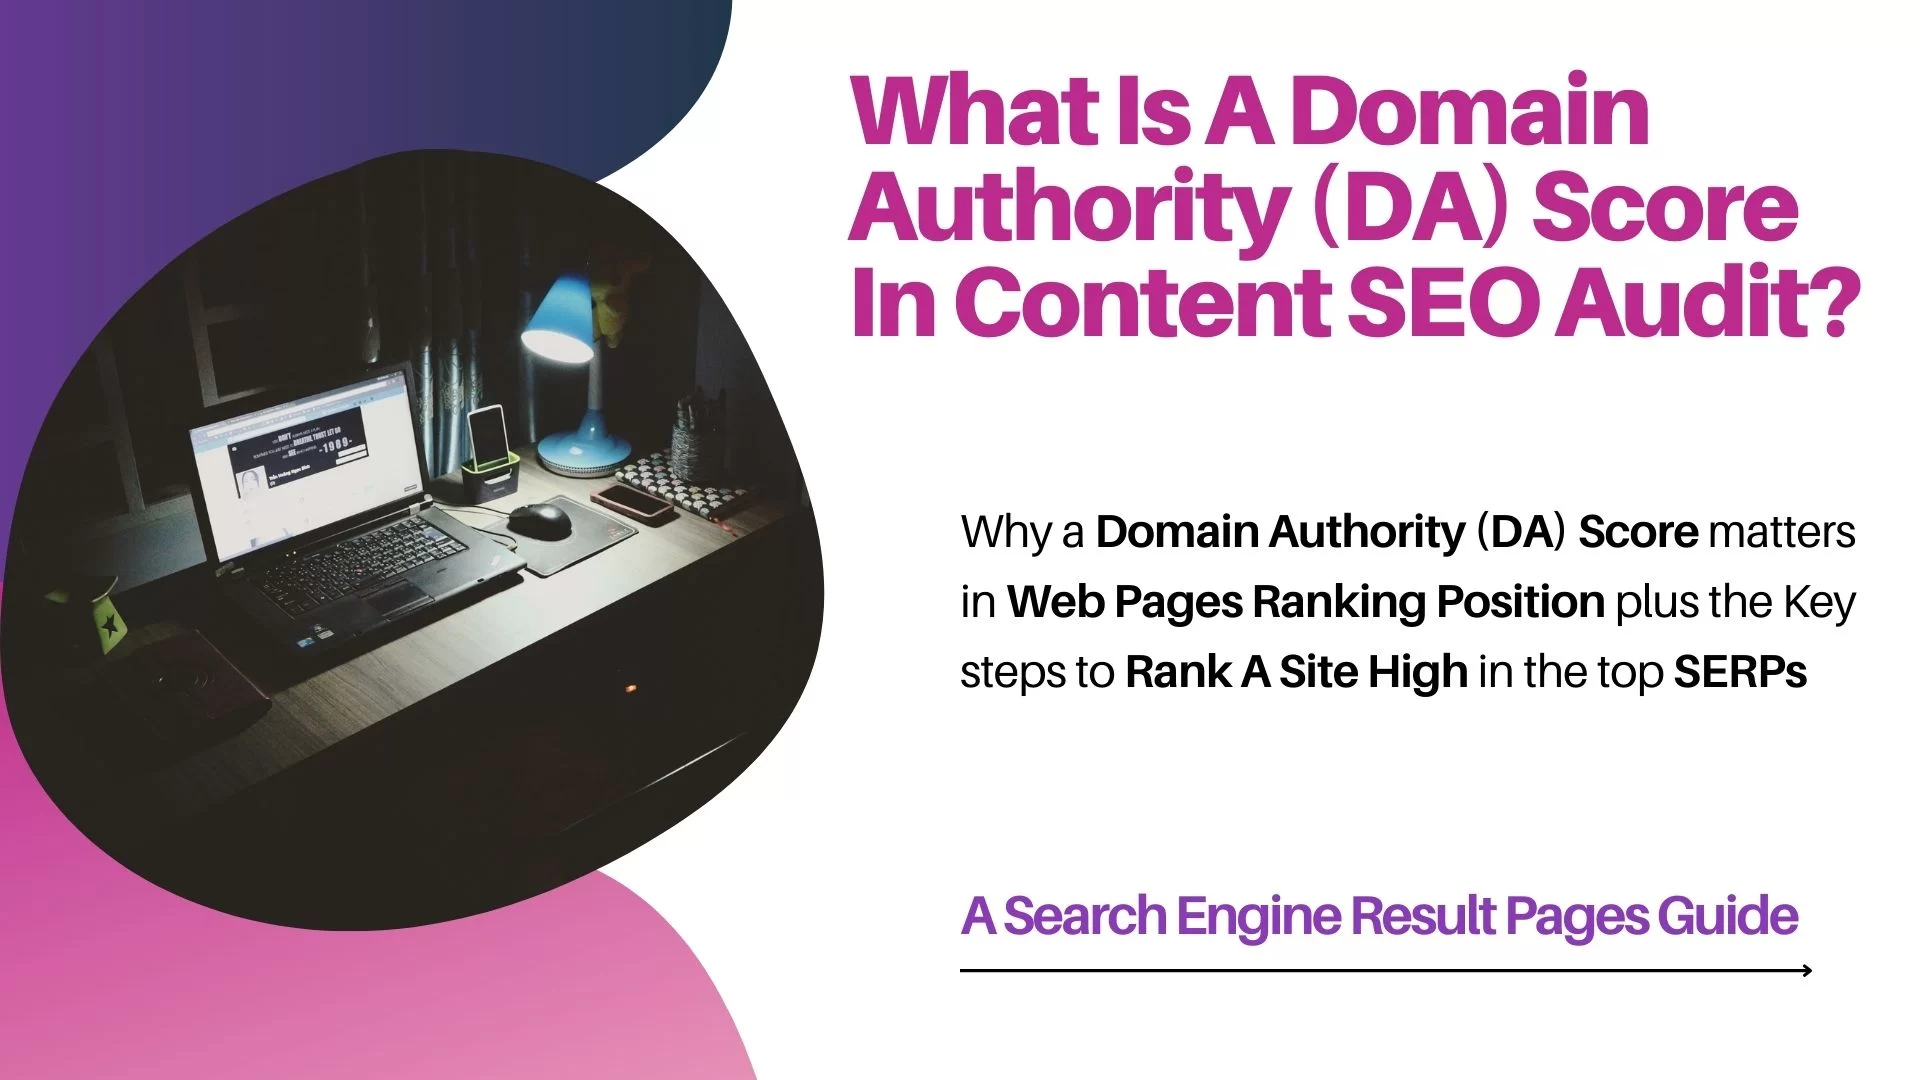 What Is Domain Authority (DA) Score?